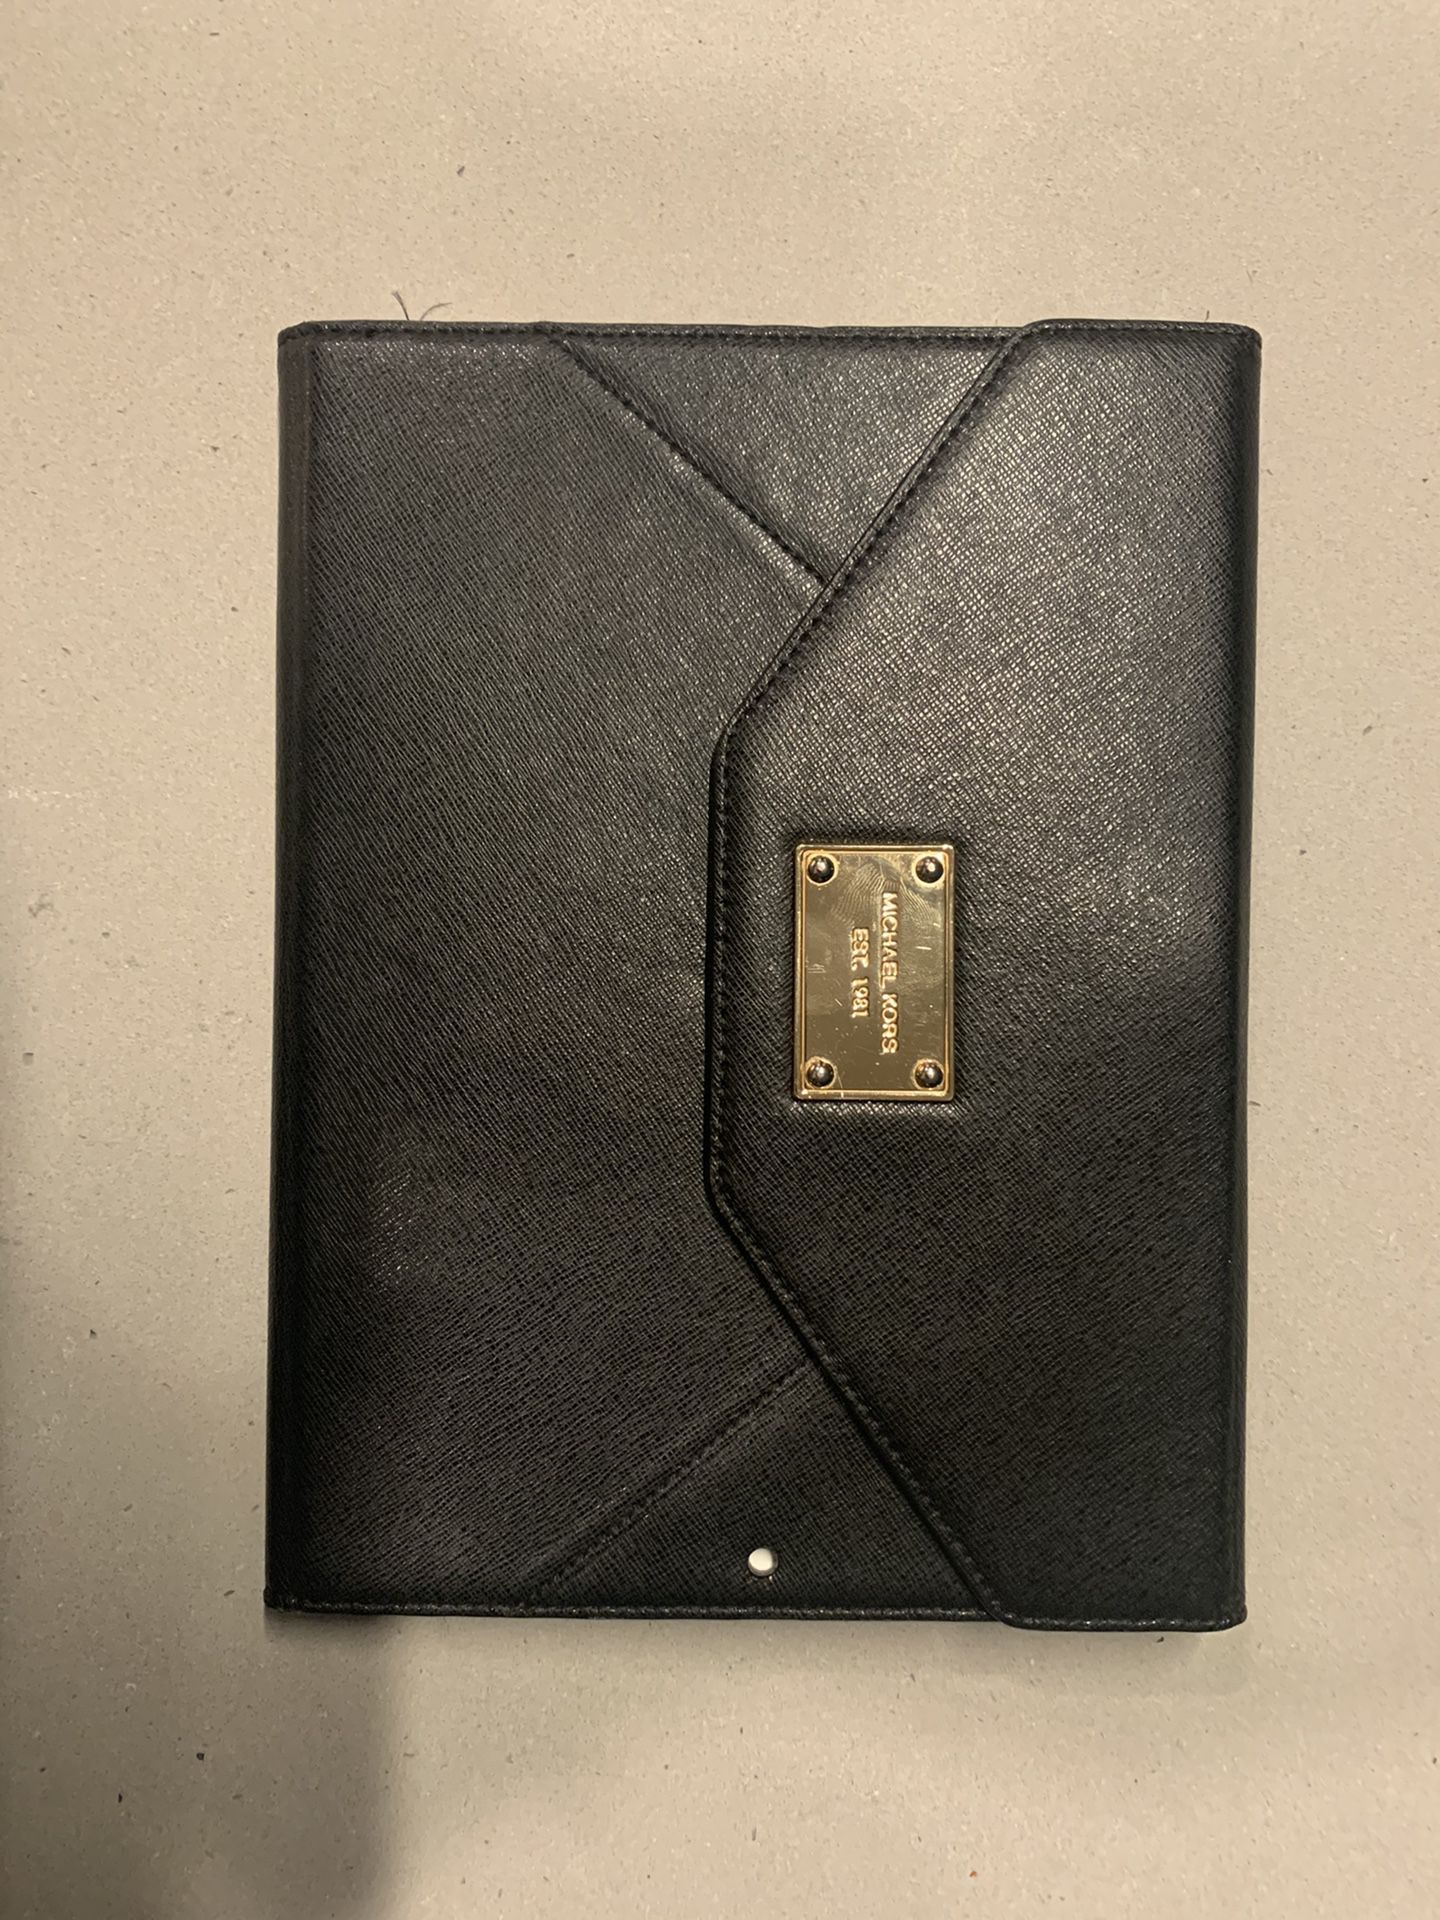 iPad Air w/ Michael Kors leather case